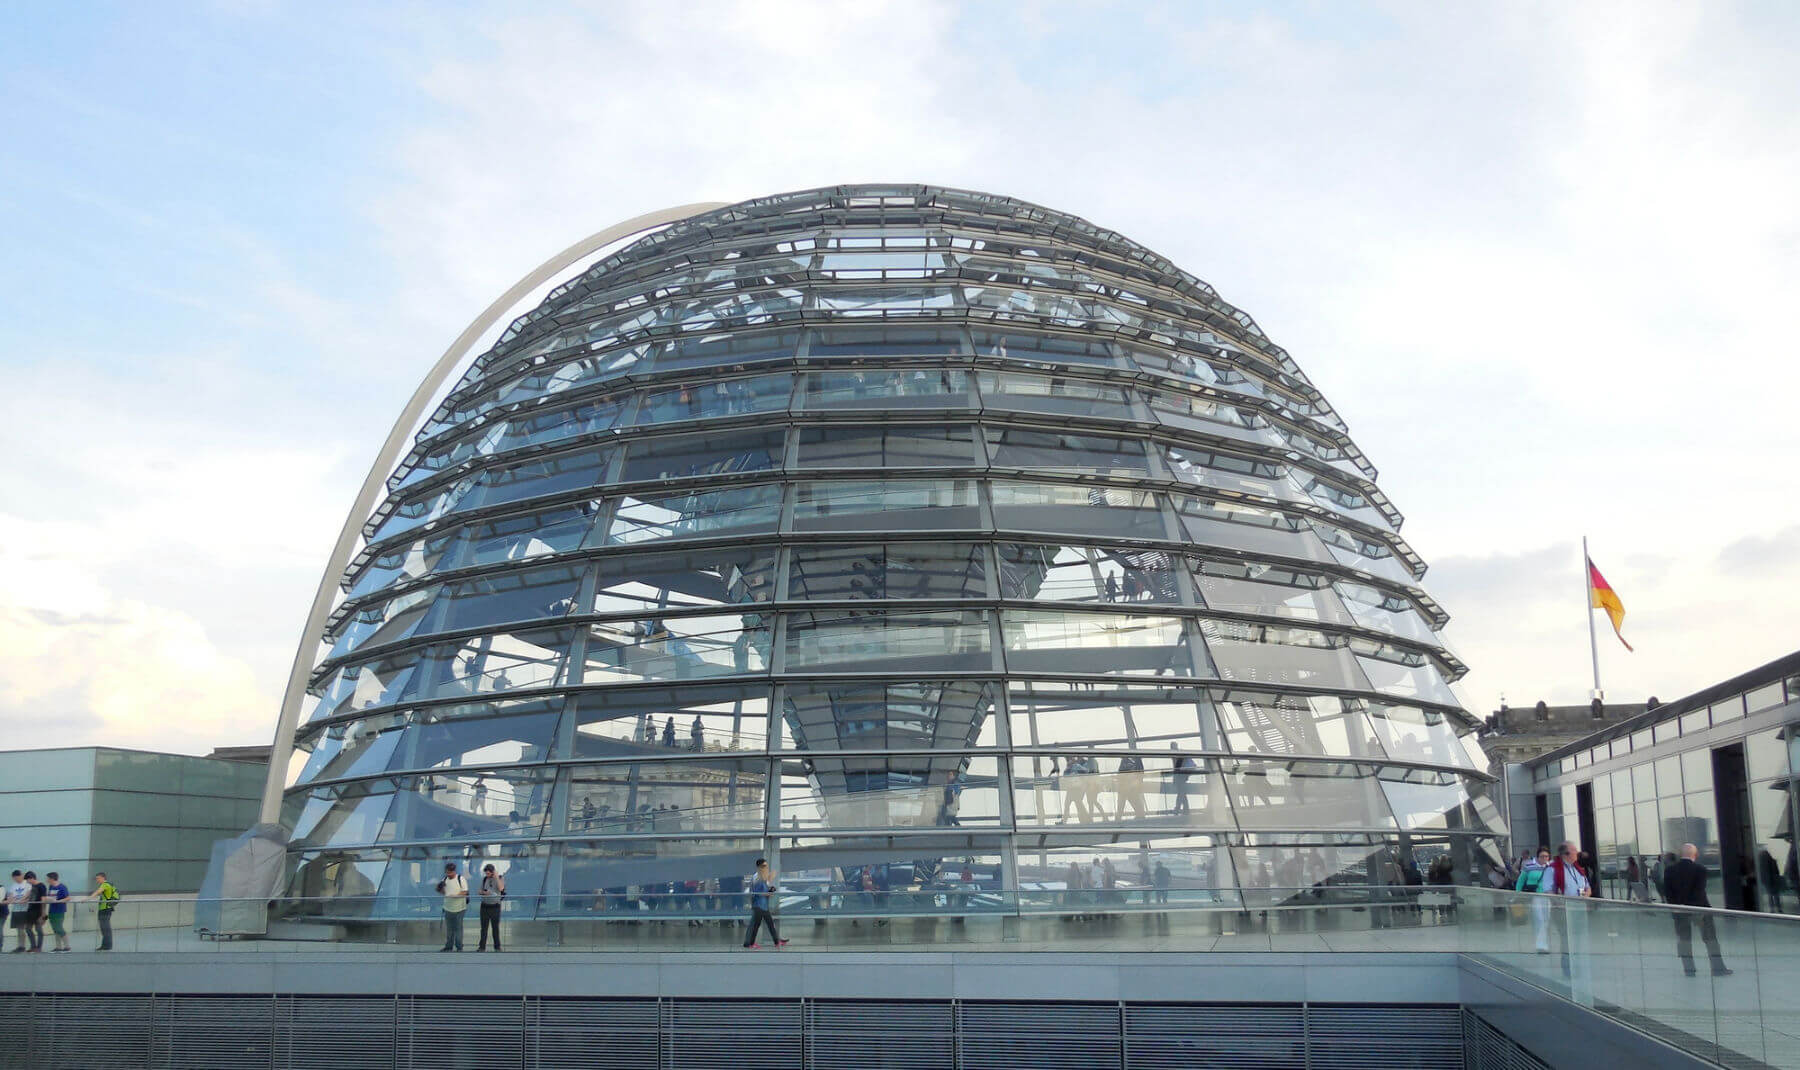 Reichstag, New German Parliament - Berlin, Germany